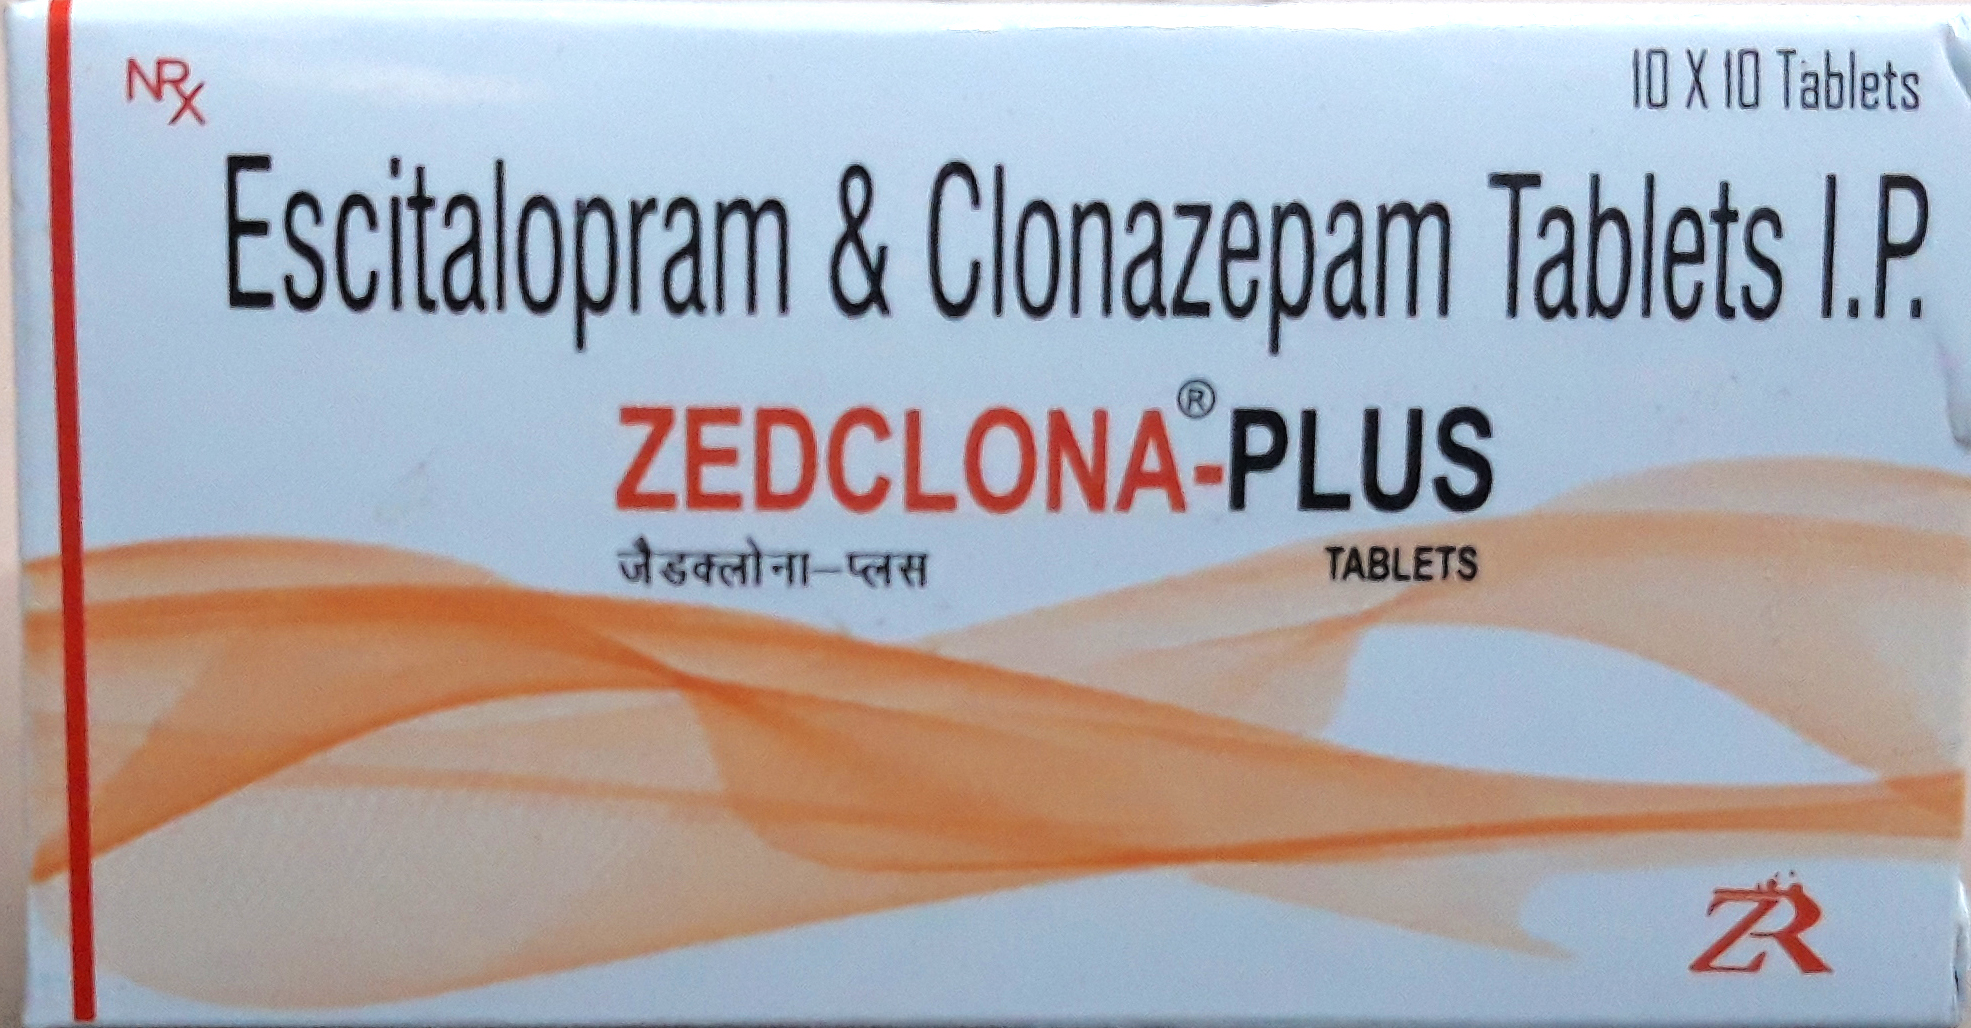 Zedclona-Plus